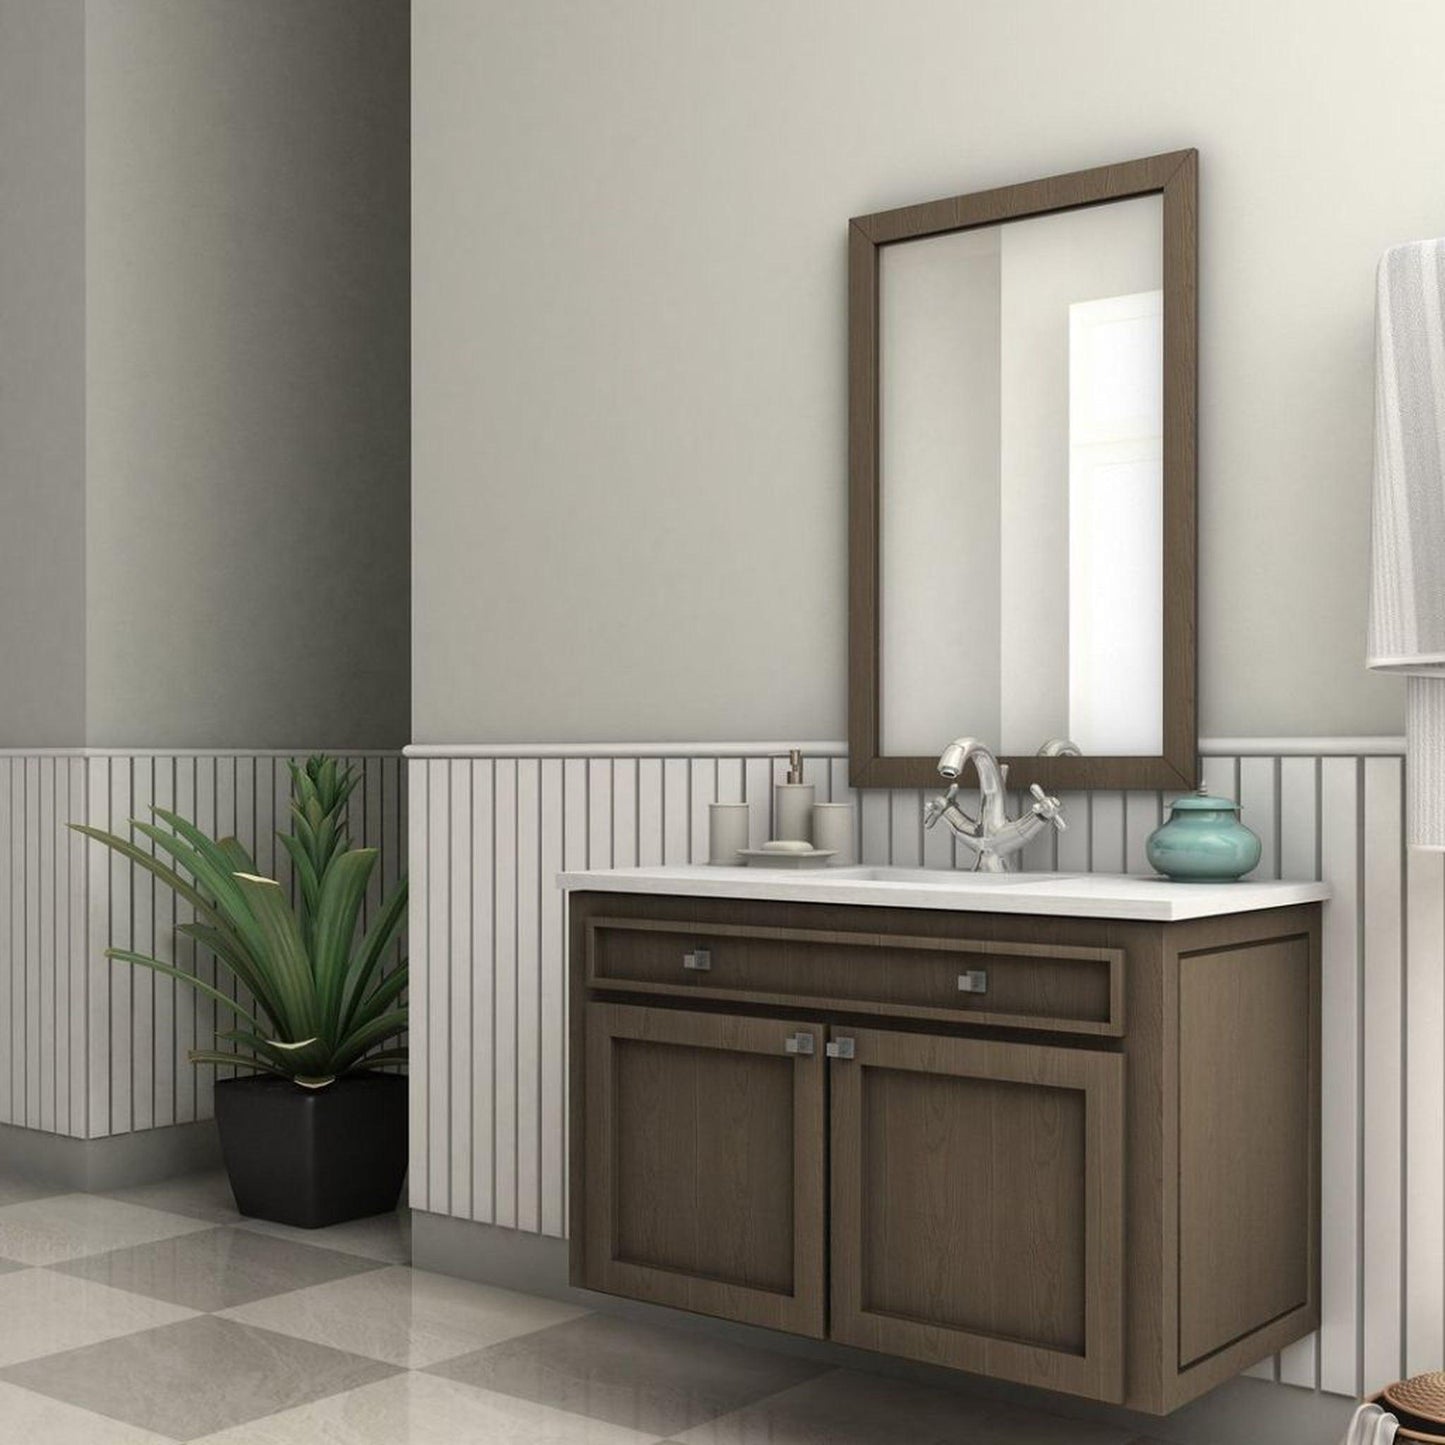 ZLINE Baldwin Centerset 1.5 GPM Chrome Bathroom Sink Faucet With Drain